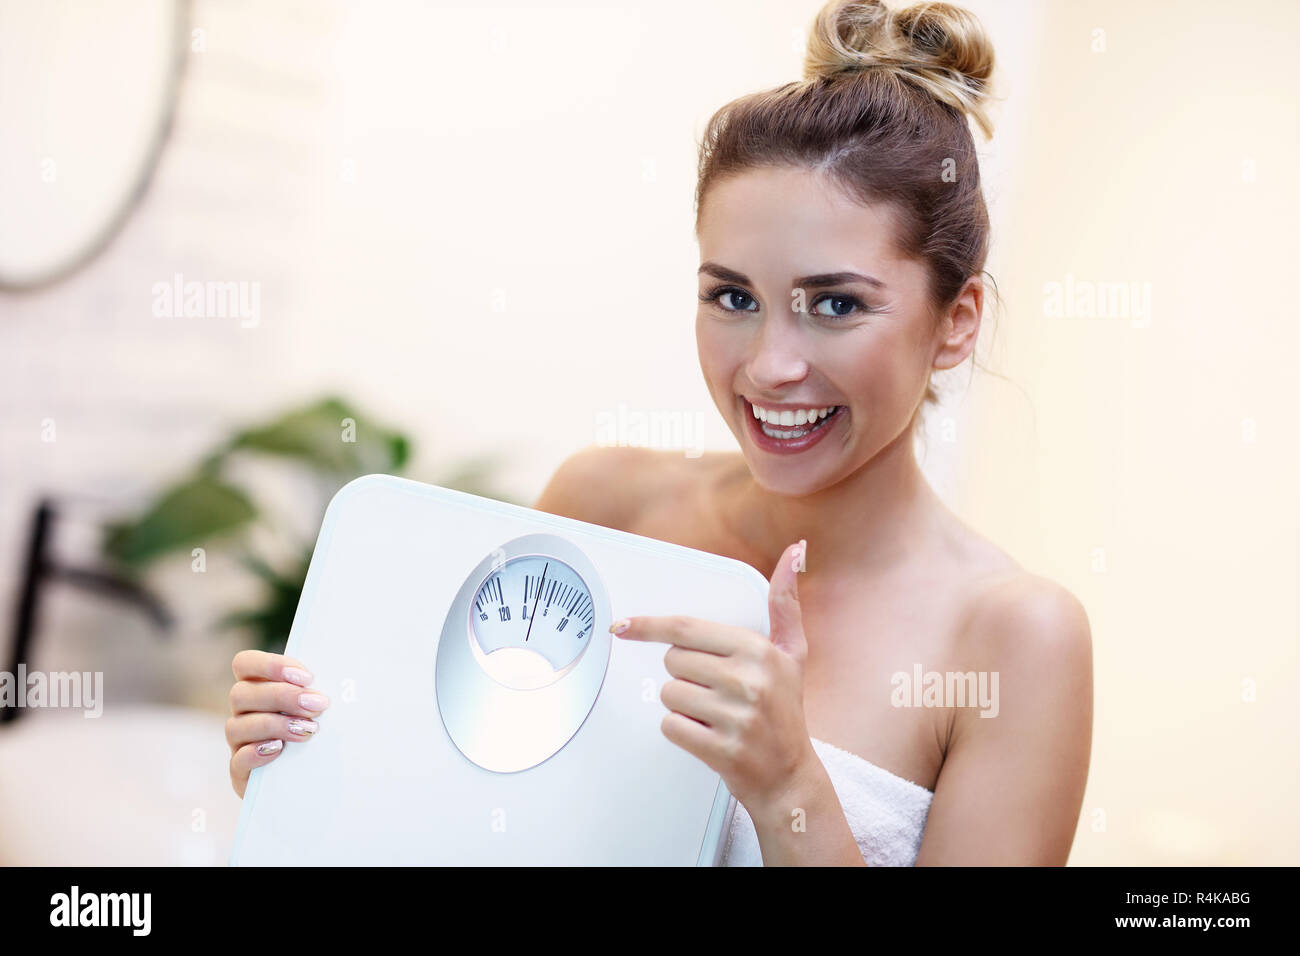 Happy woman holding bathroom scales in bathroom Stock Photo